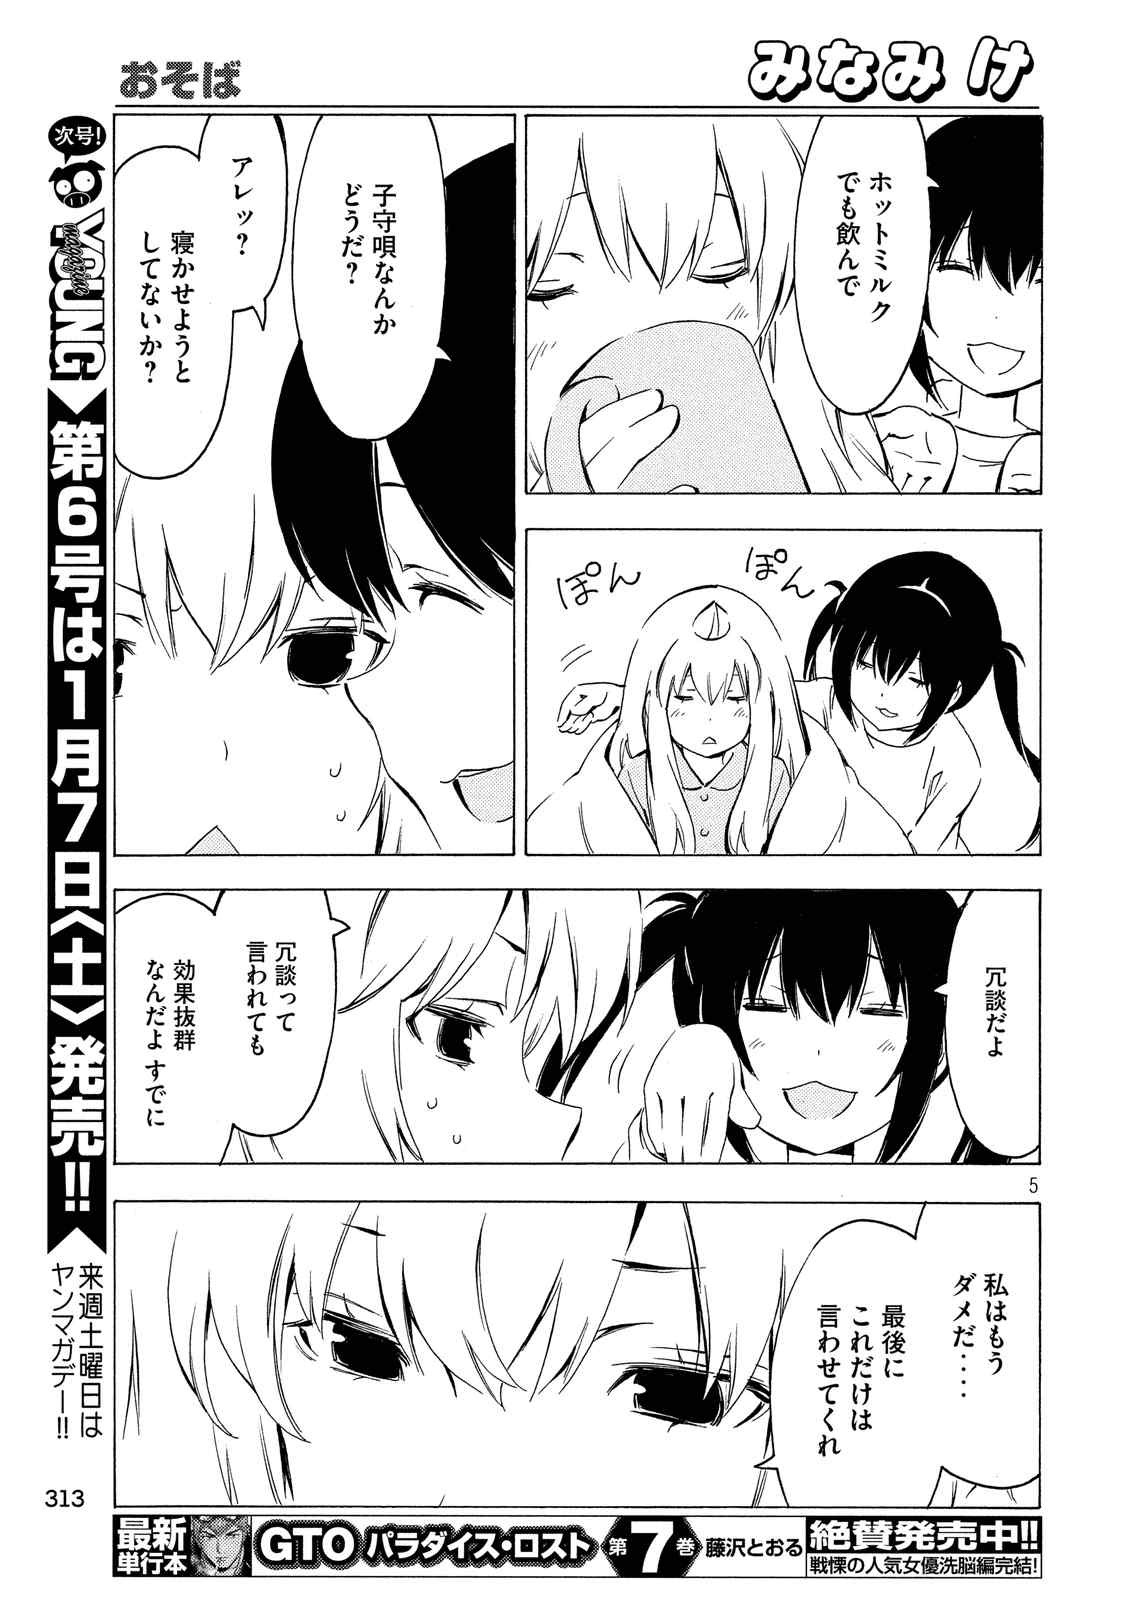 Minami-ke - Chapter 307 - Page 5